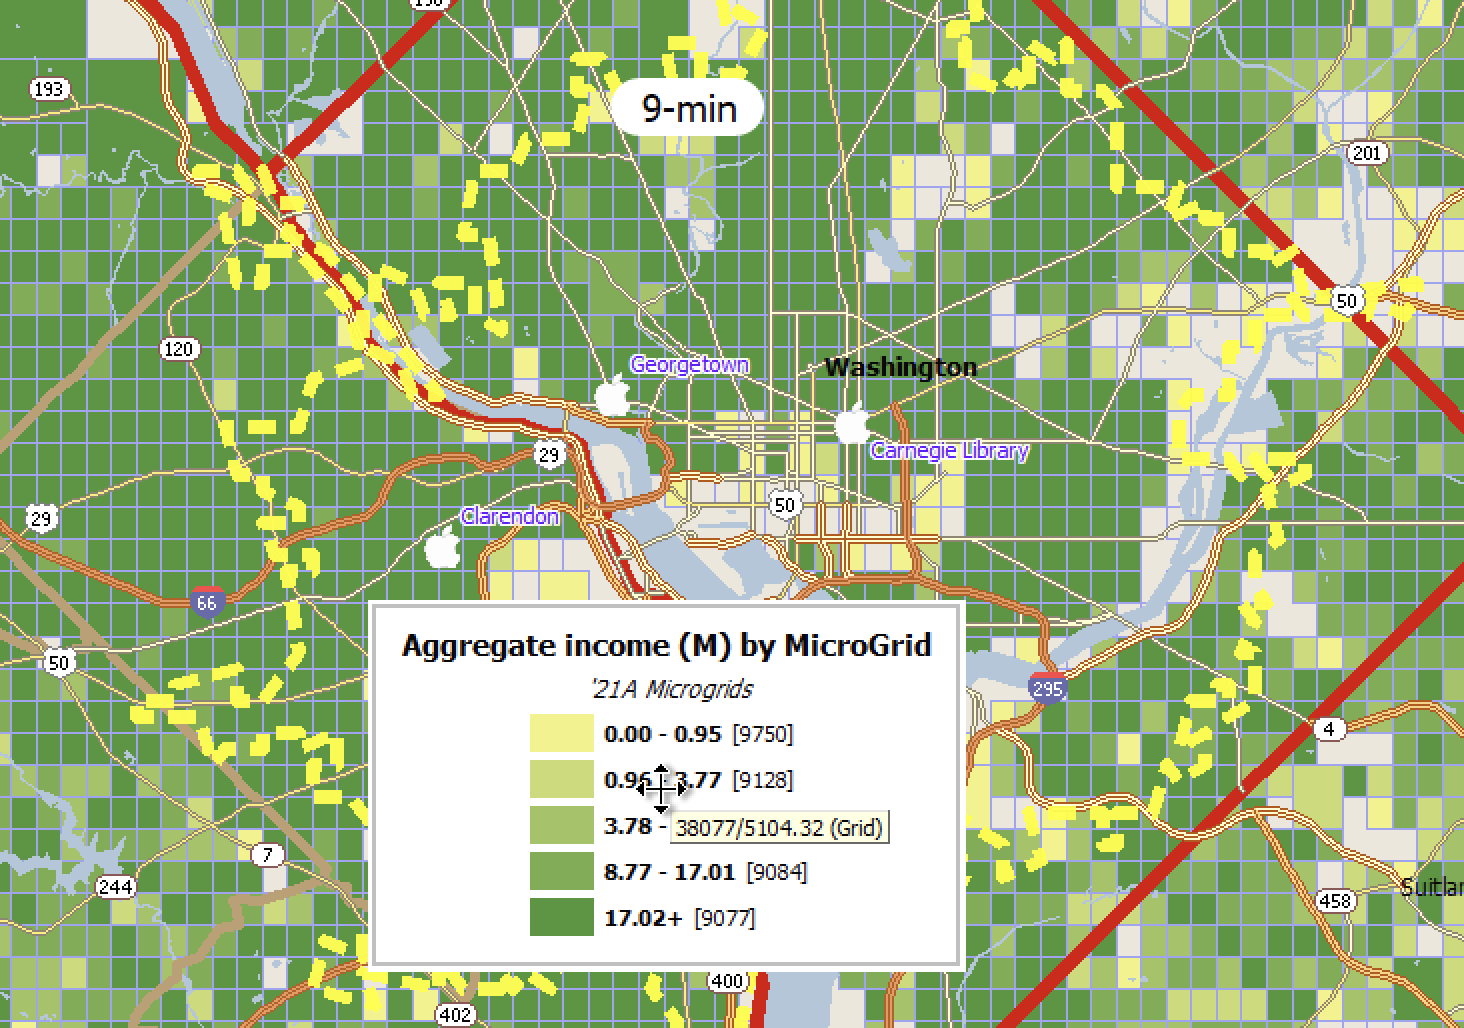 Aggregate income on Microgrids